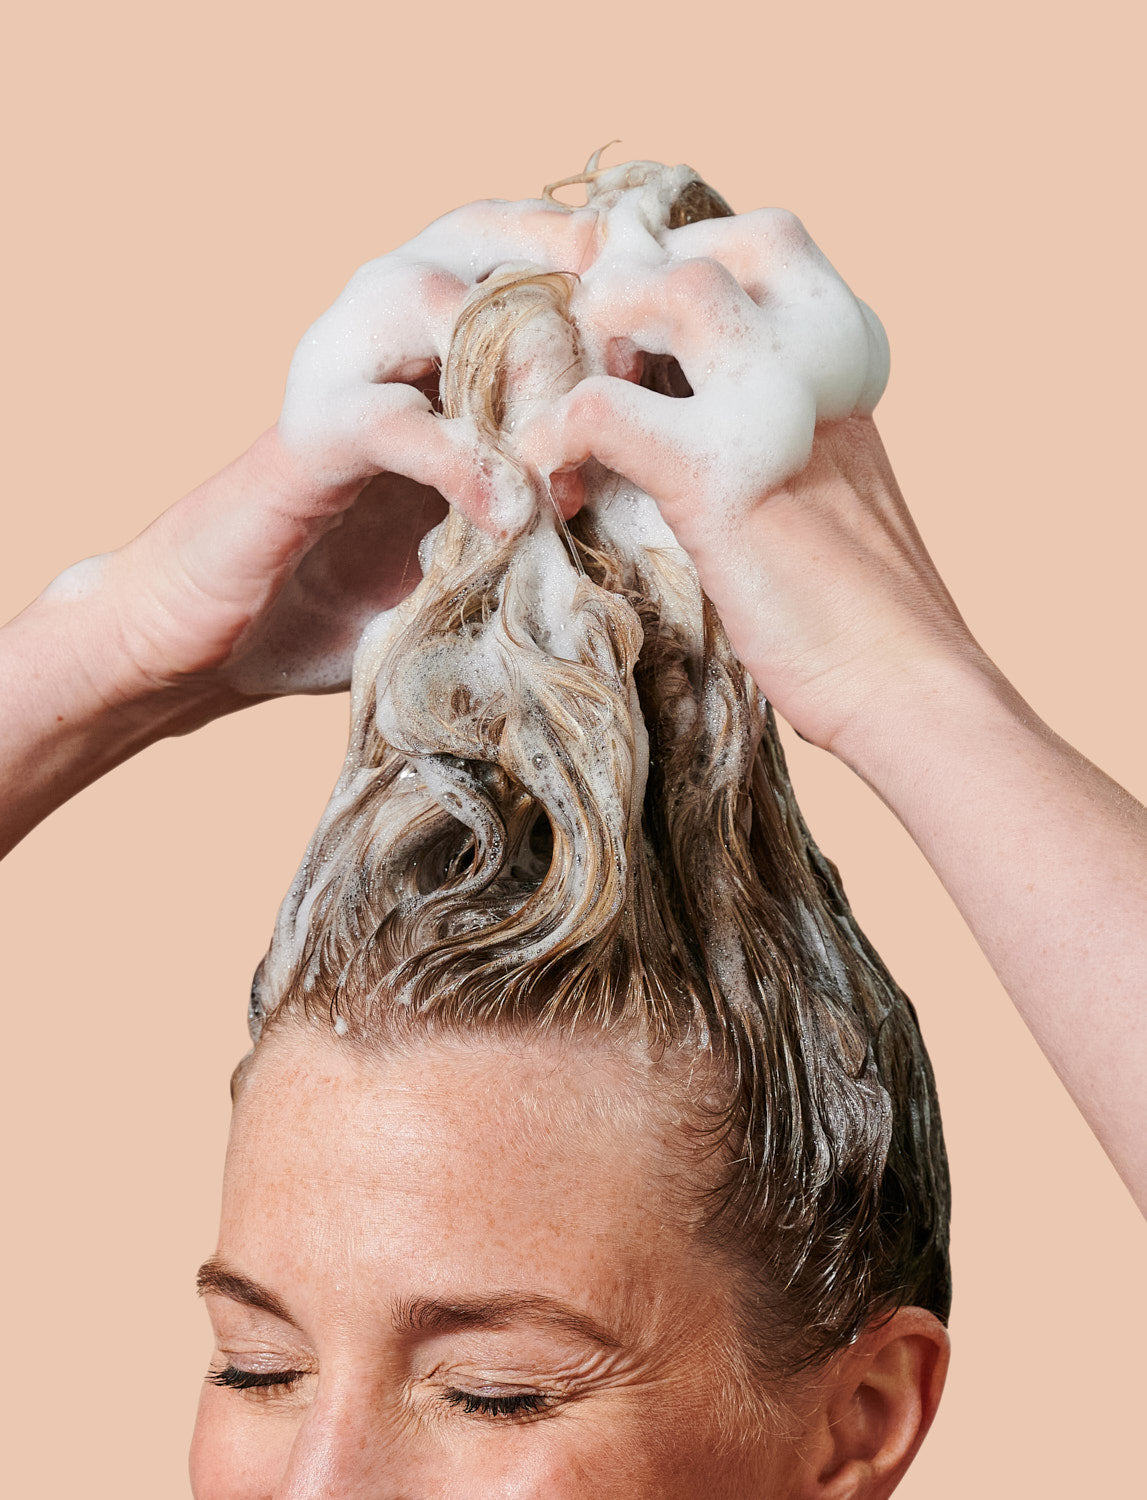 Shedding: the Natural Cycle of Hair